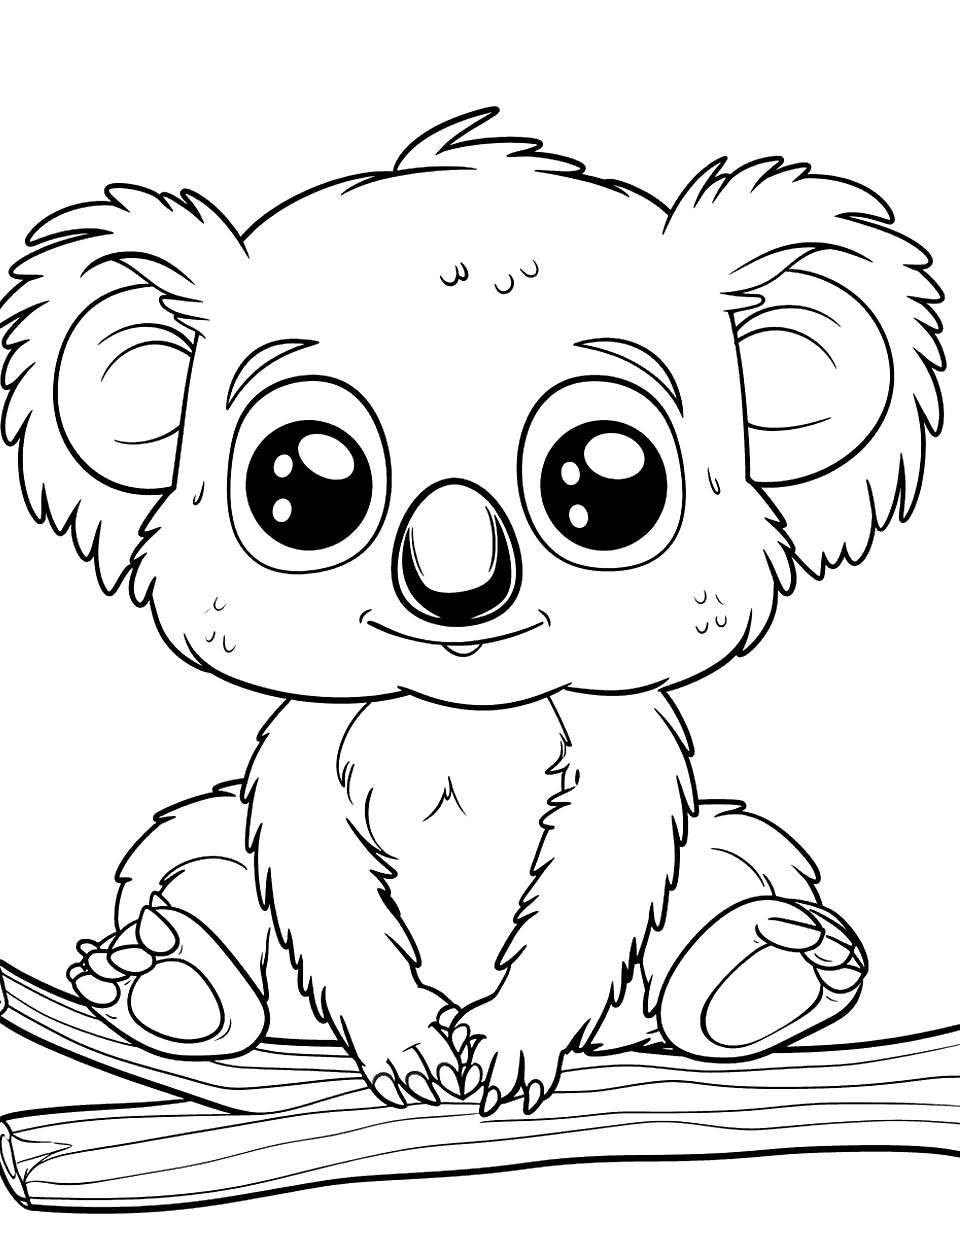 Kawaii Koala with Big Eyes Coloring Page - A cartoon-style koala with exaggerated big eyes and a cheerful smile.